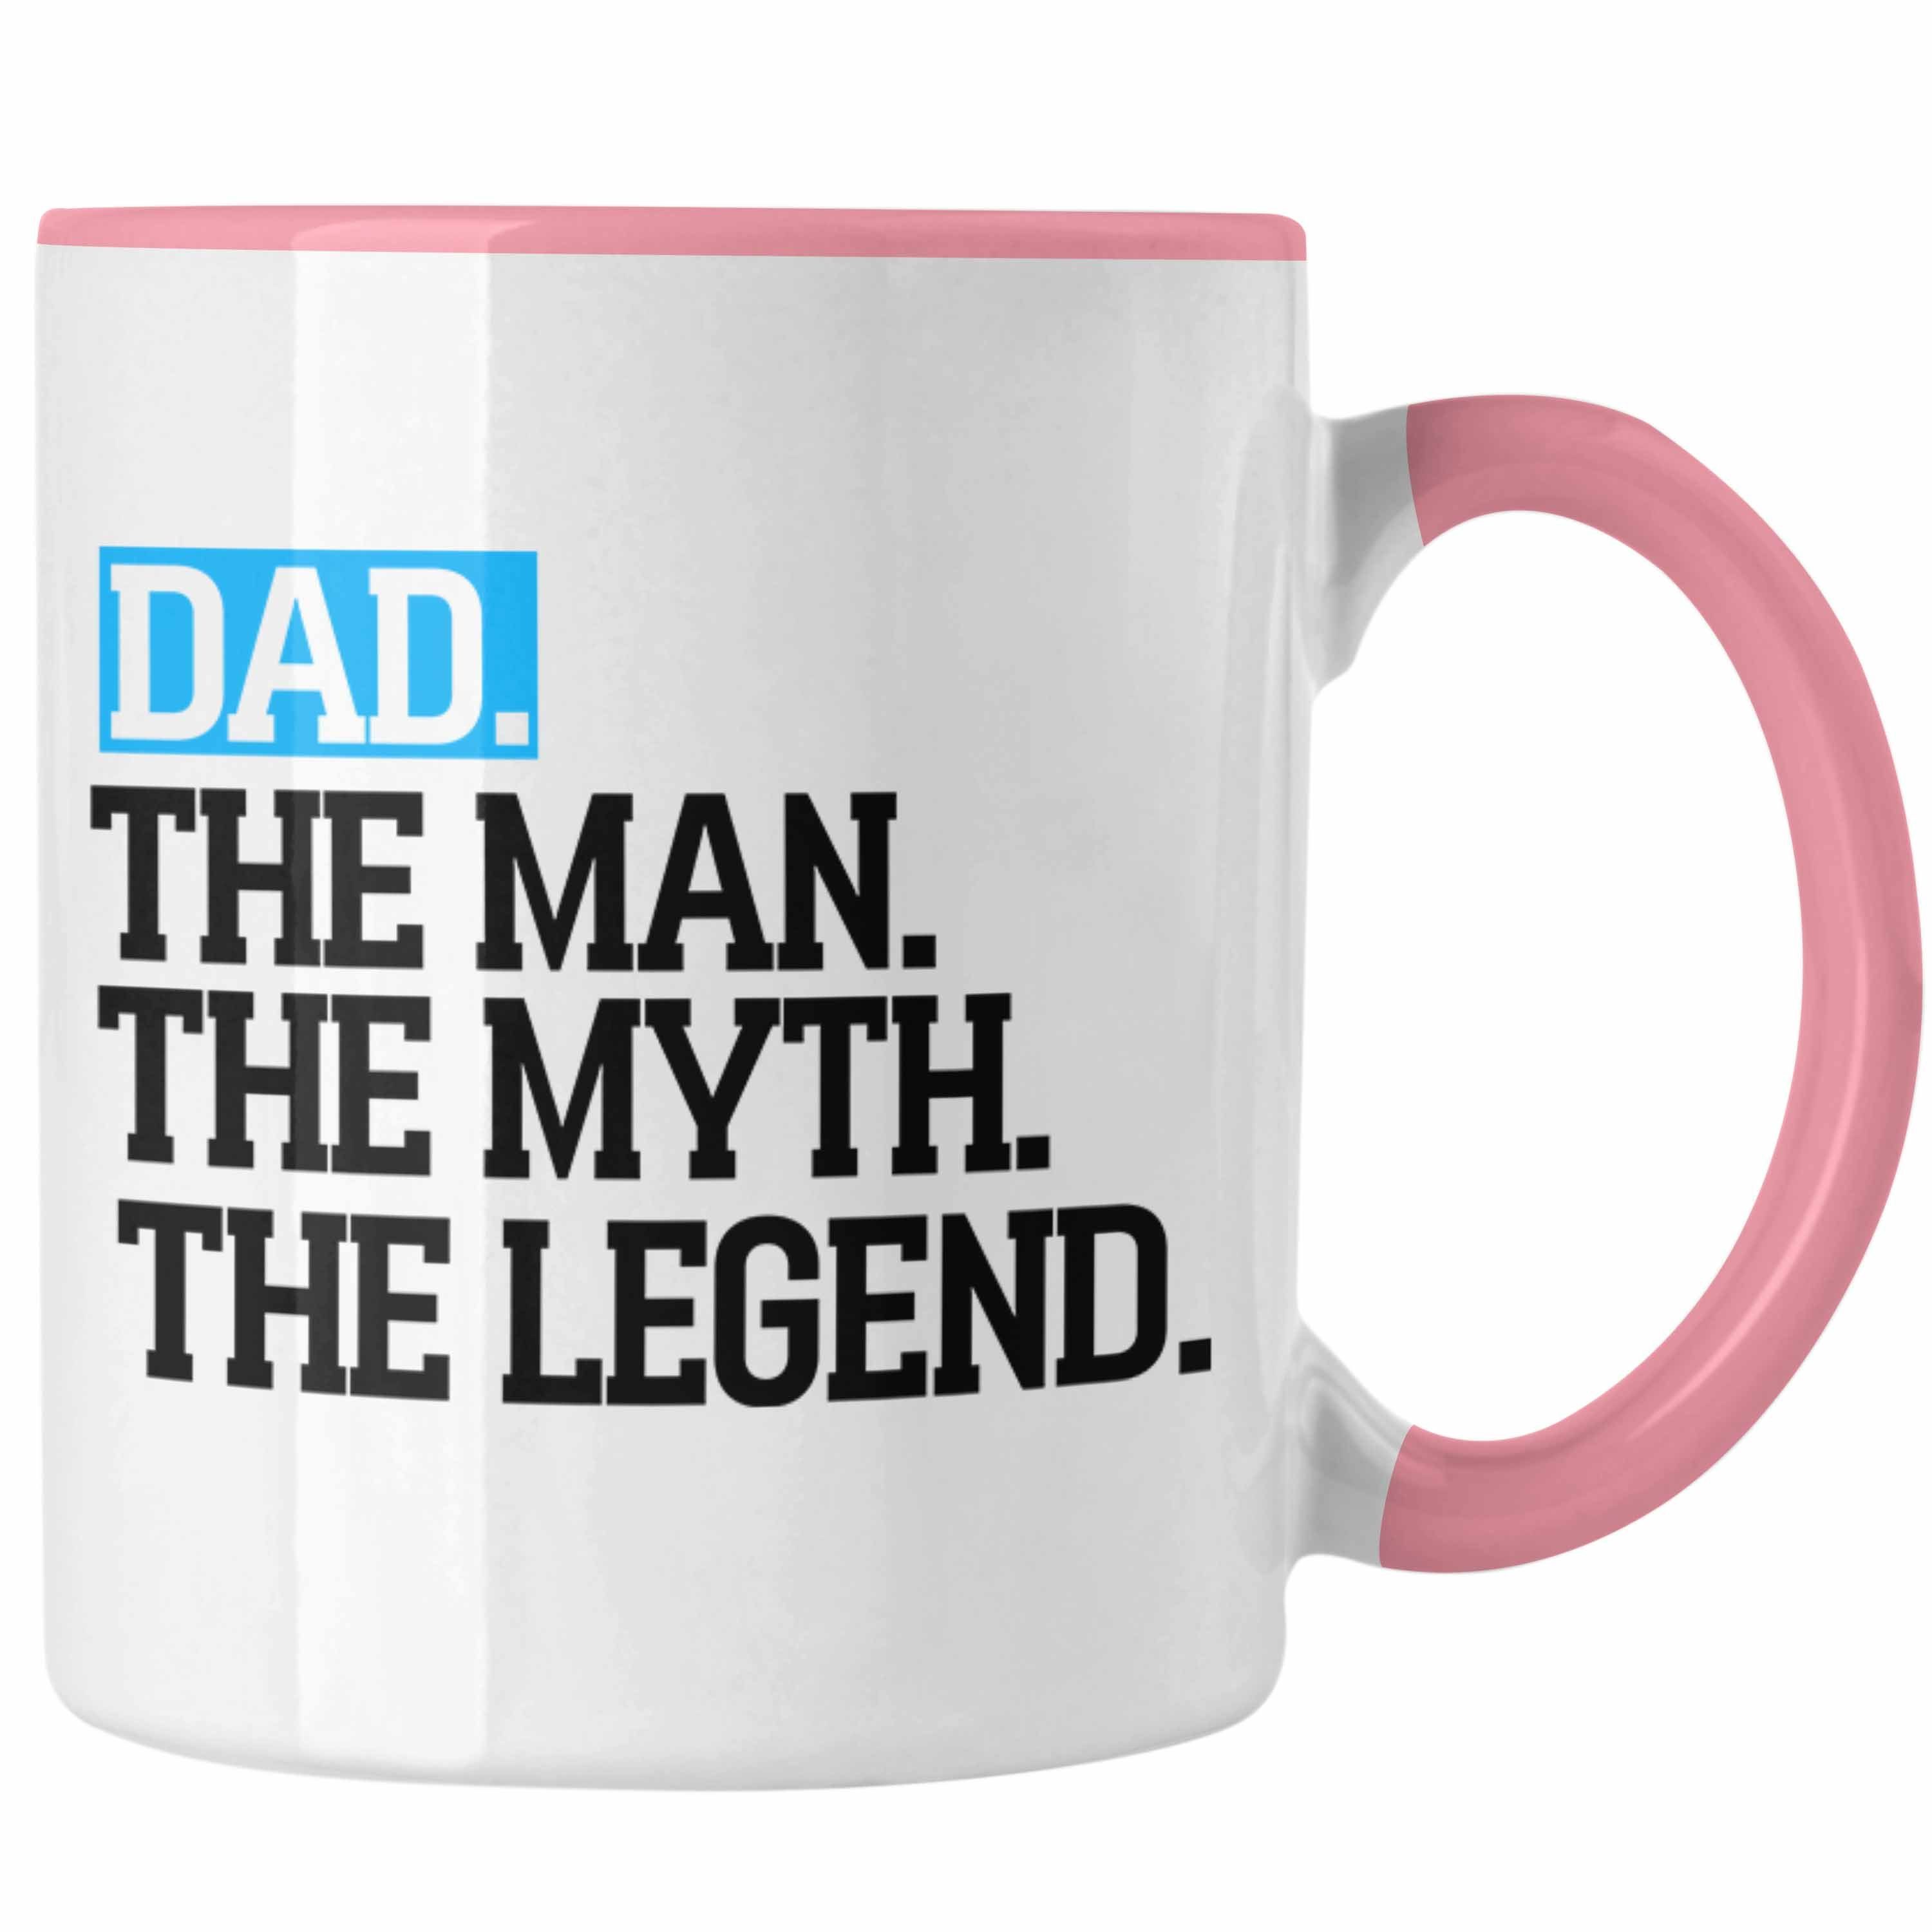 Trendation Rosa Tasse Man The für "Dad Lustig Tasse Vatertag Legend" Spru Myth The Vater The